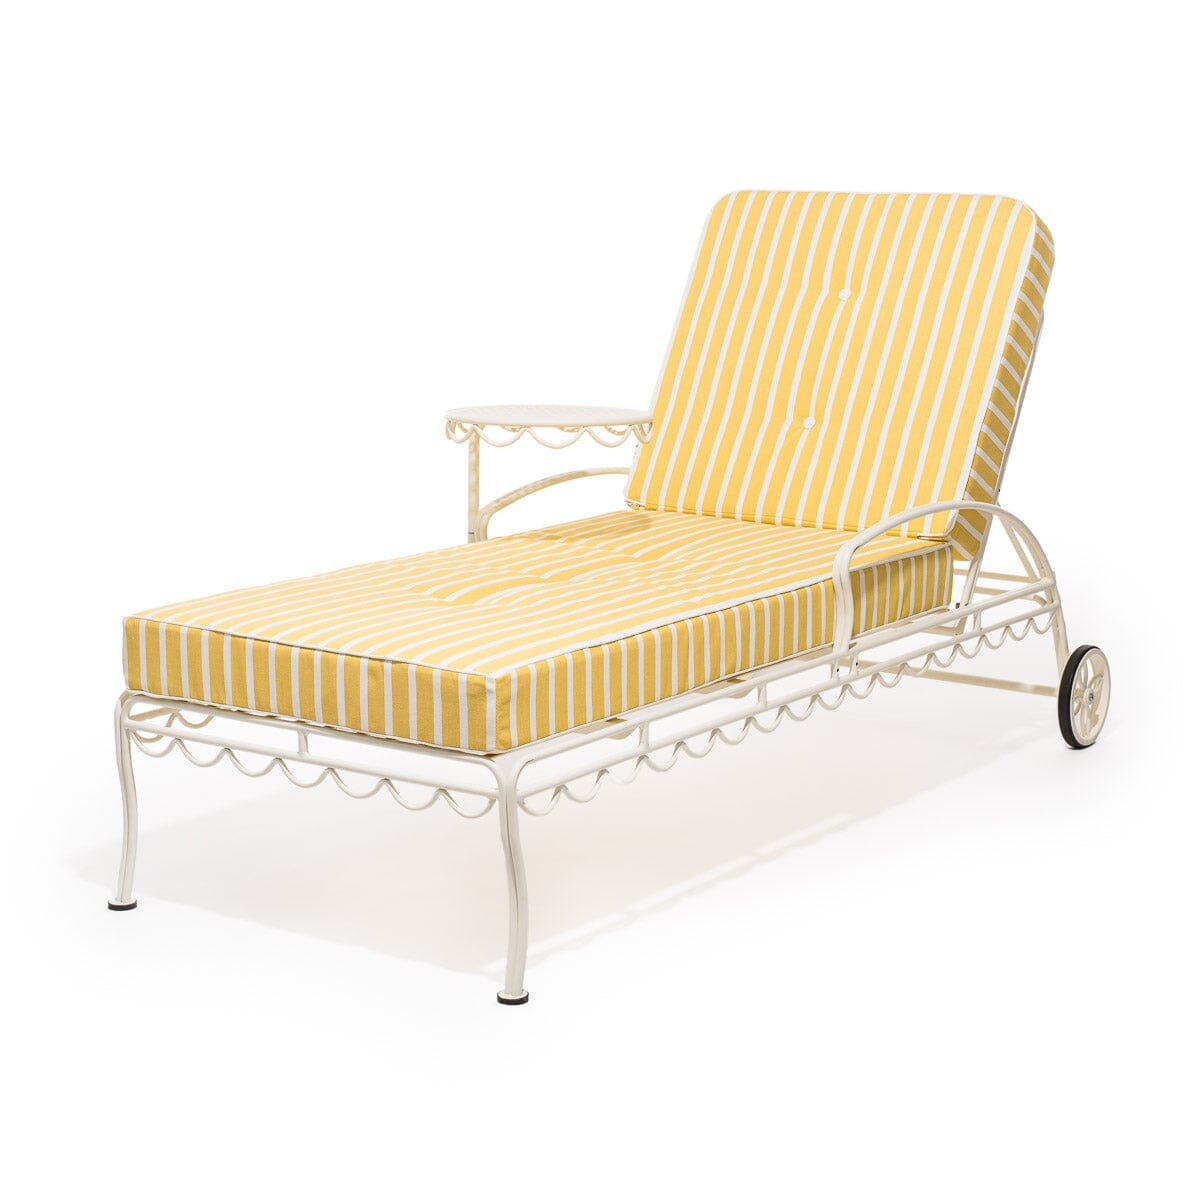 The Al Fresco Sun Lounger Cushion - Monaco Mimosa Stripe Al Fresco Sun Lounger Cushions Business & Pleasure Co 